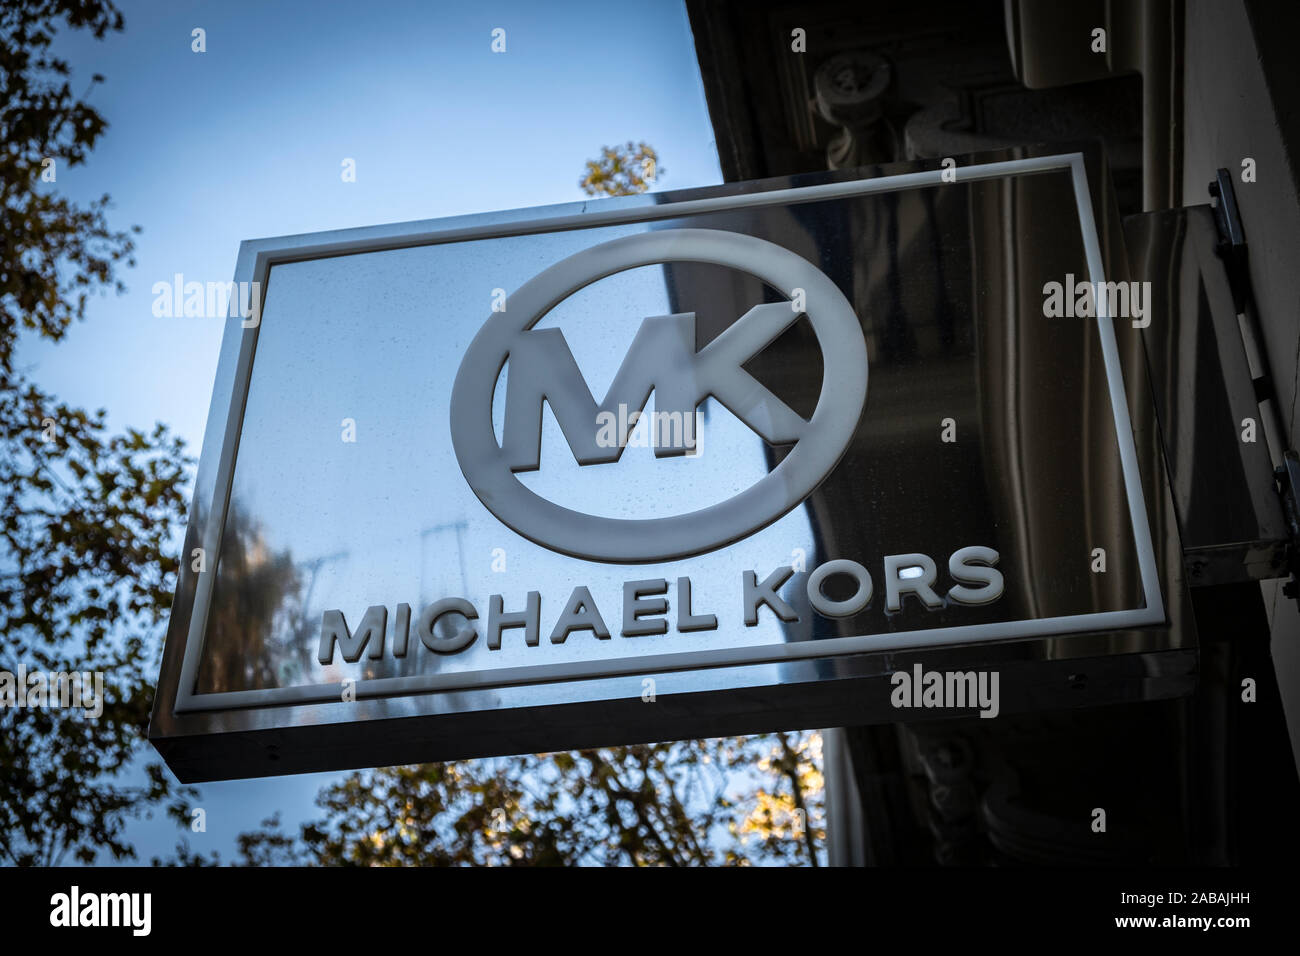 michael kors manufacturer